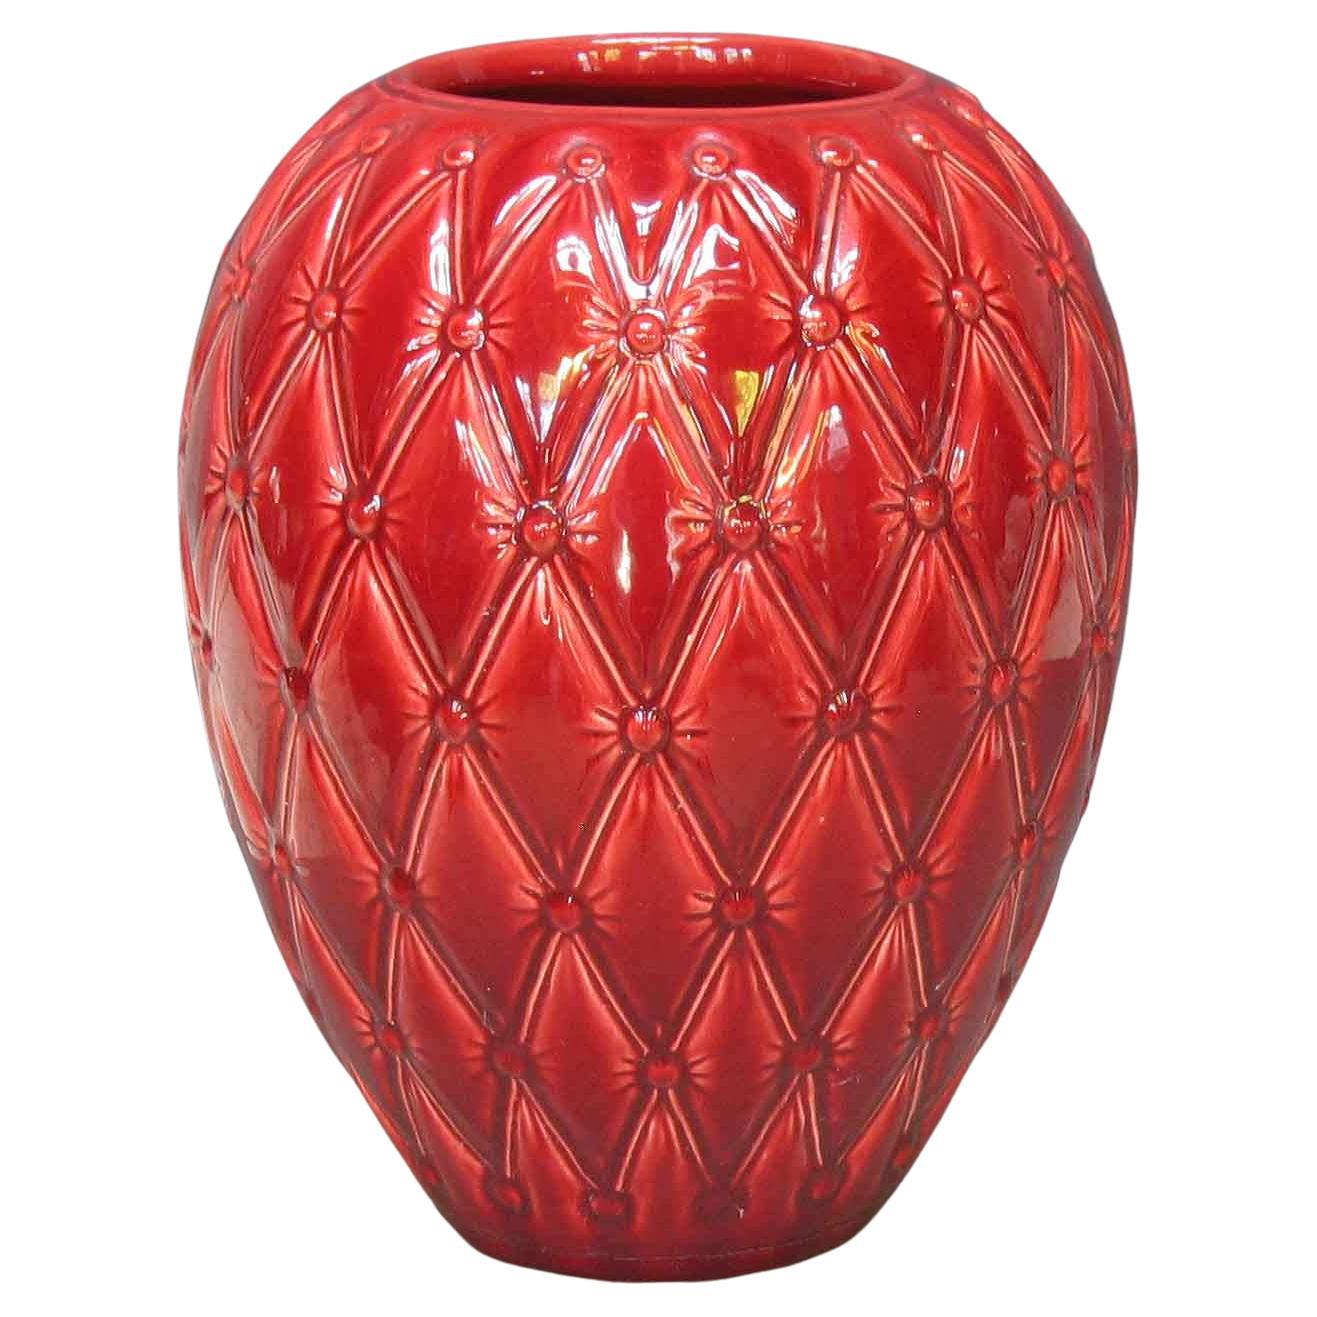 Large Red Glazed Art Studio Pottery Vase